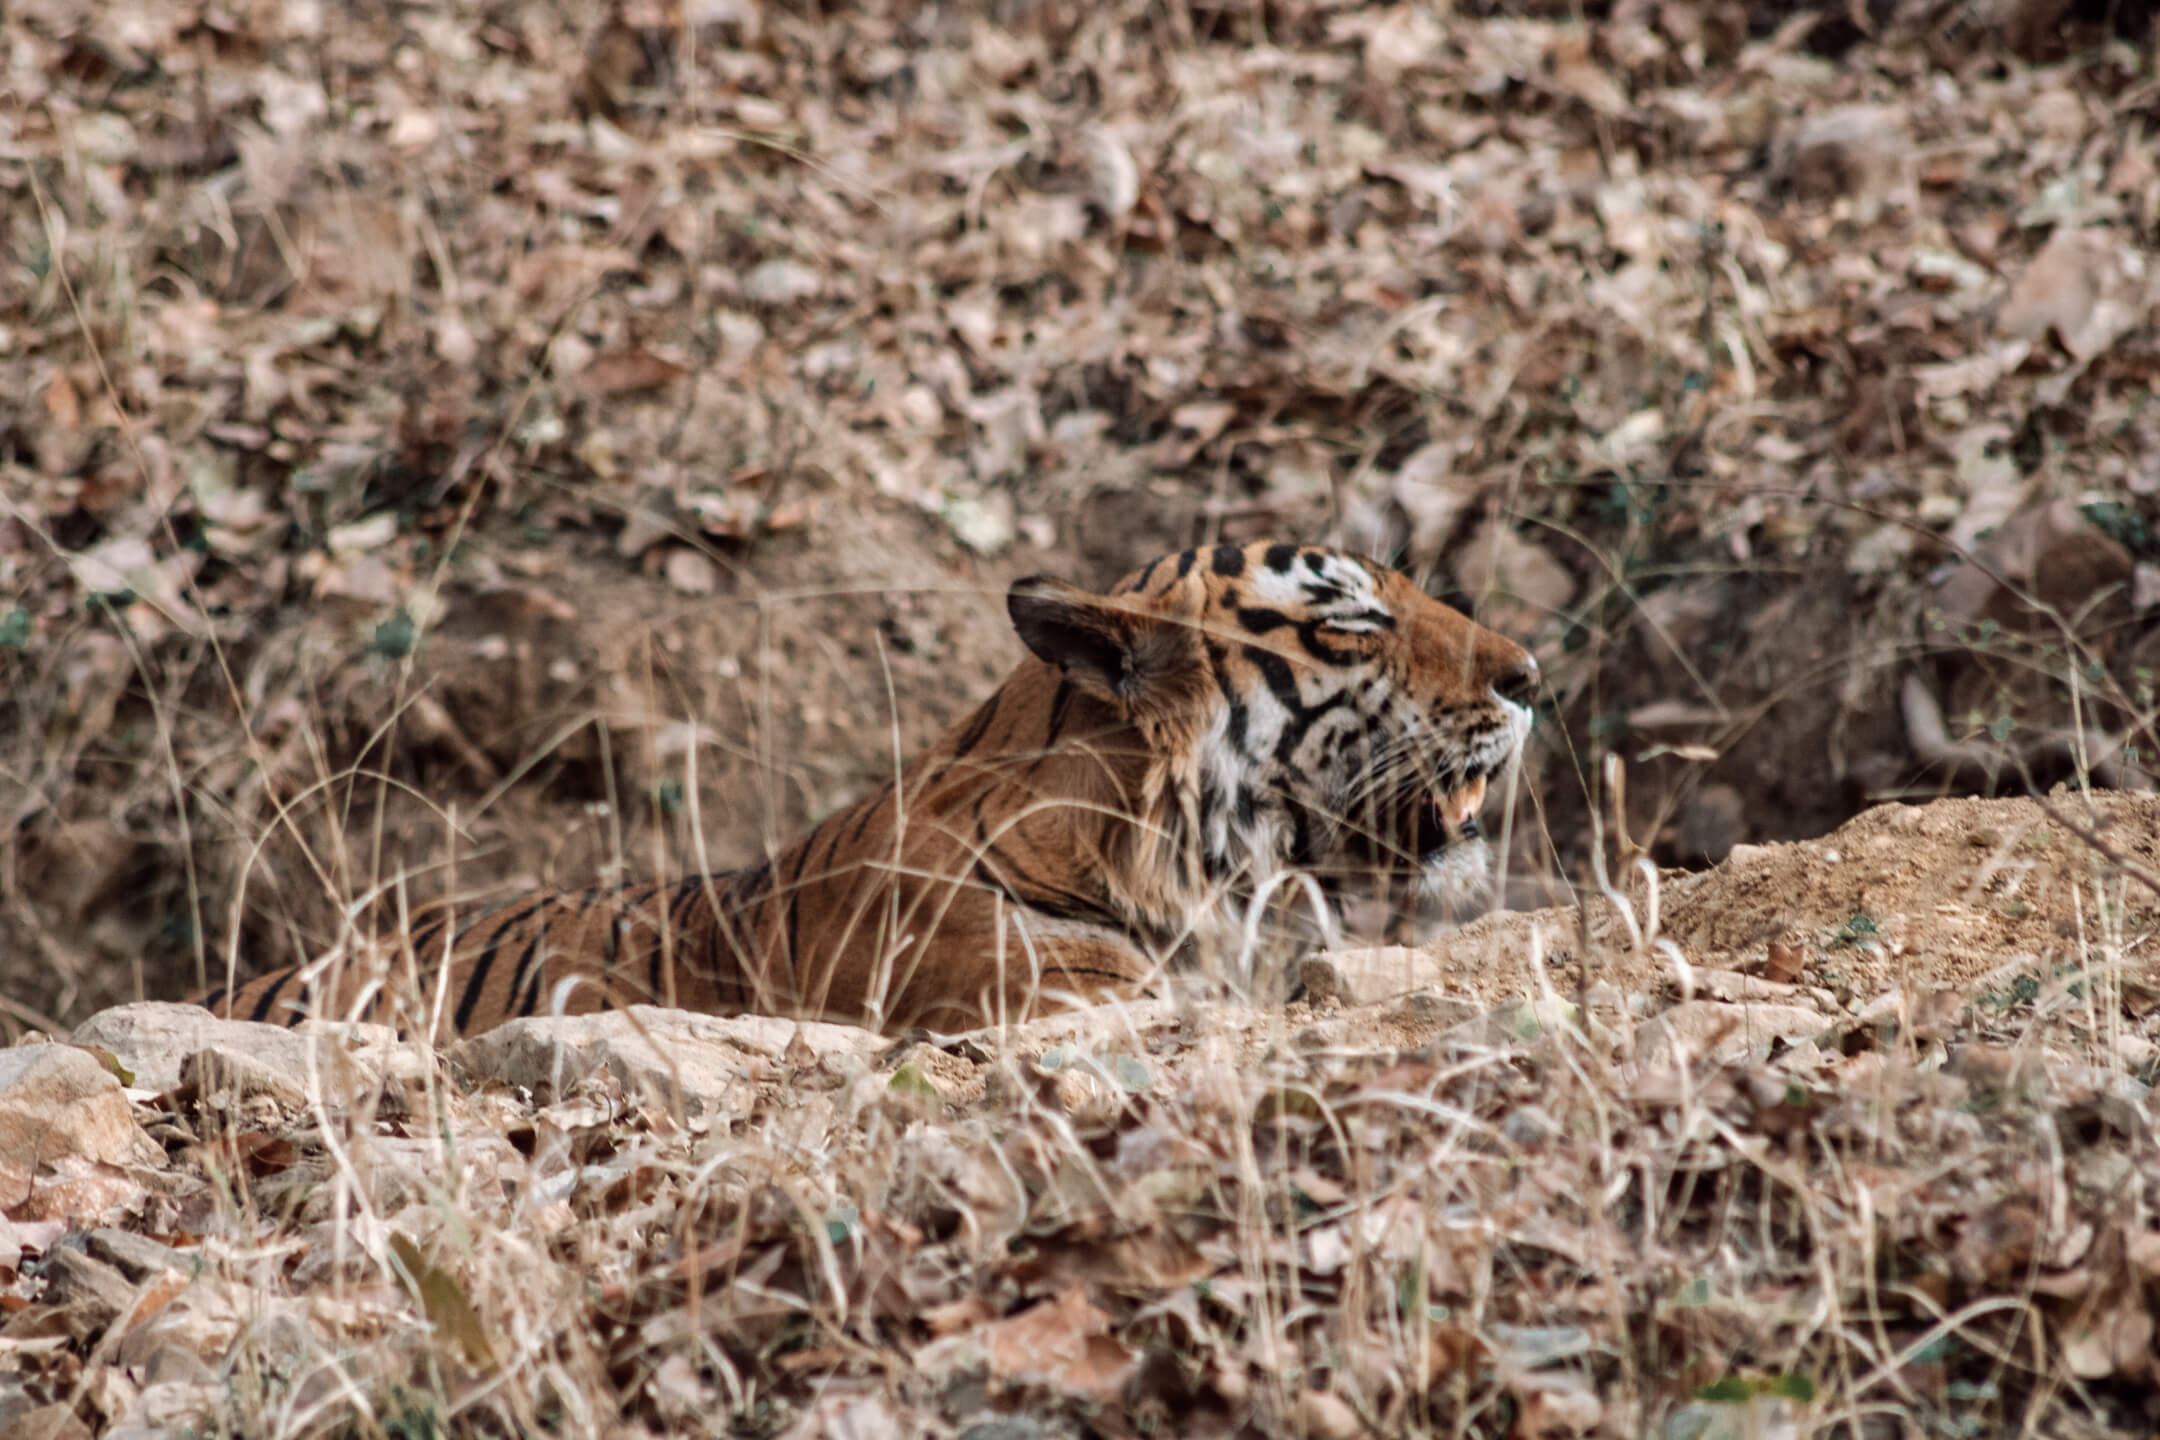 A beautiful Royal Bengal Tiger we saw in Ranthambore National Park